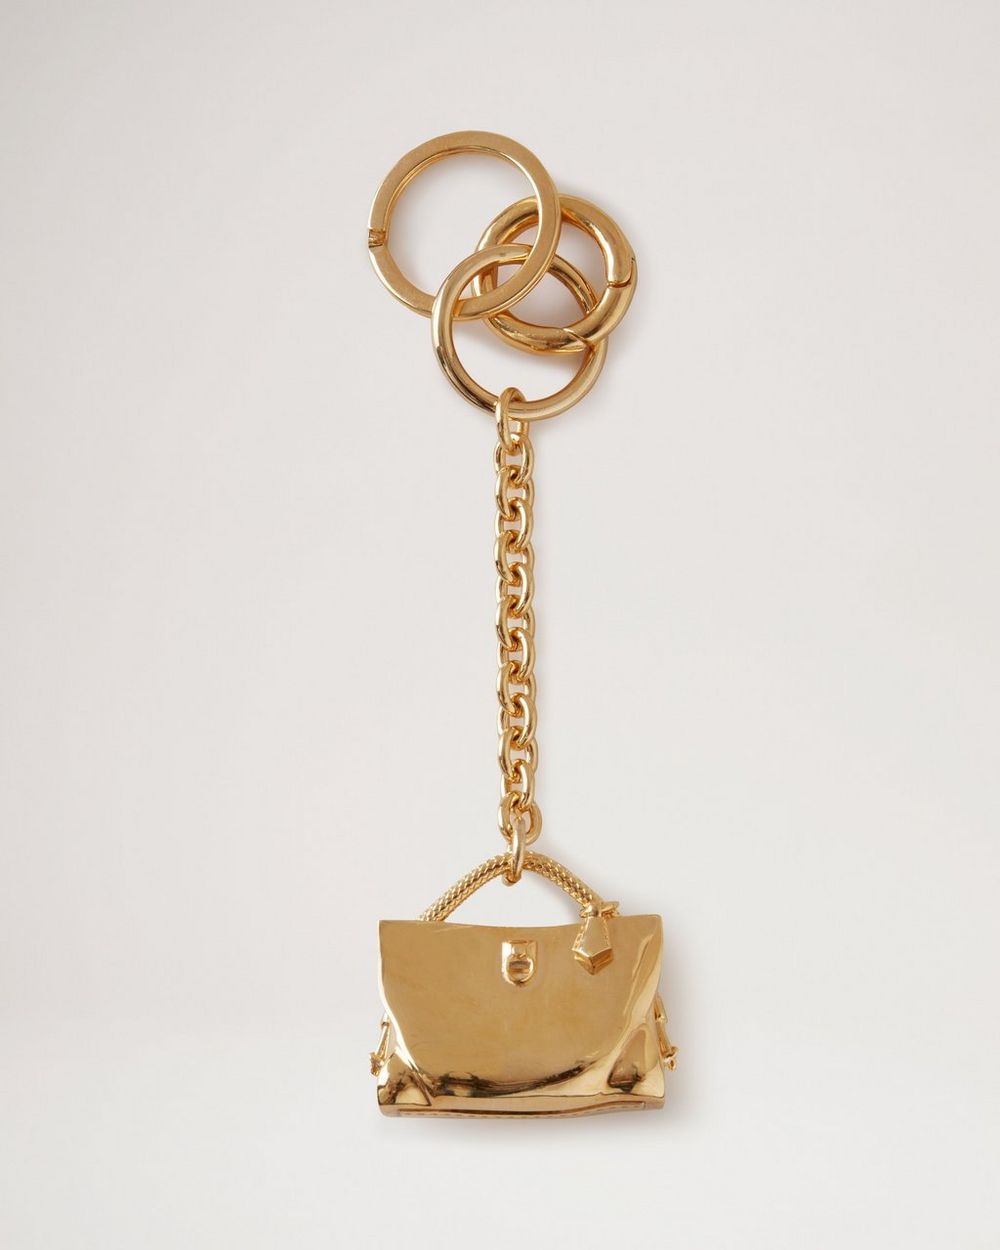 Louis Vuitton Authentic Metal chain iconic Key Chain Bag Charm